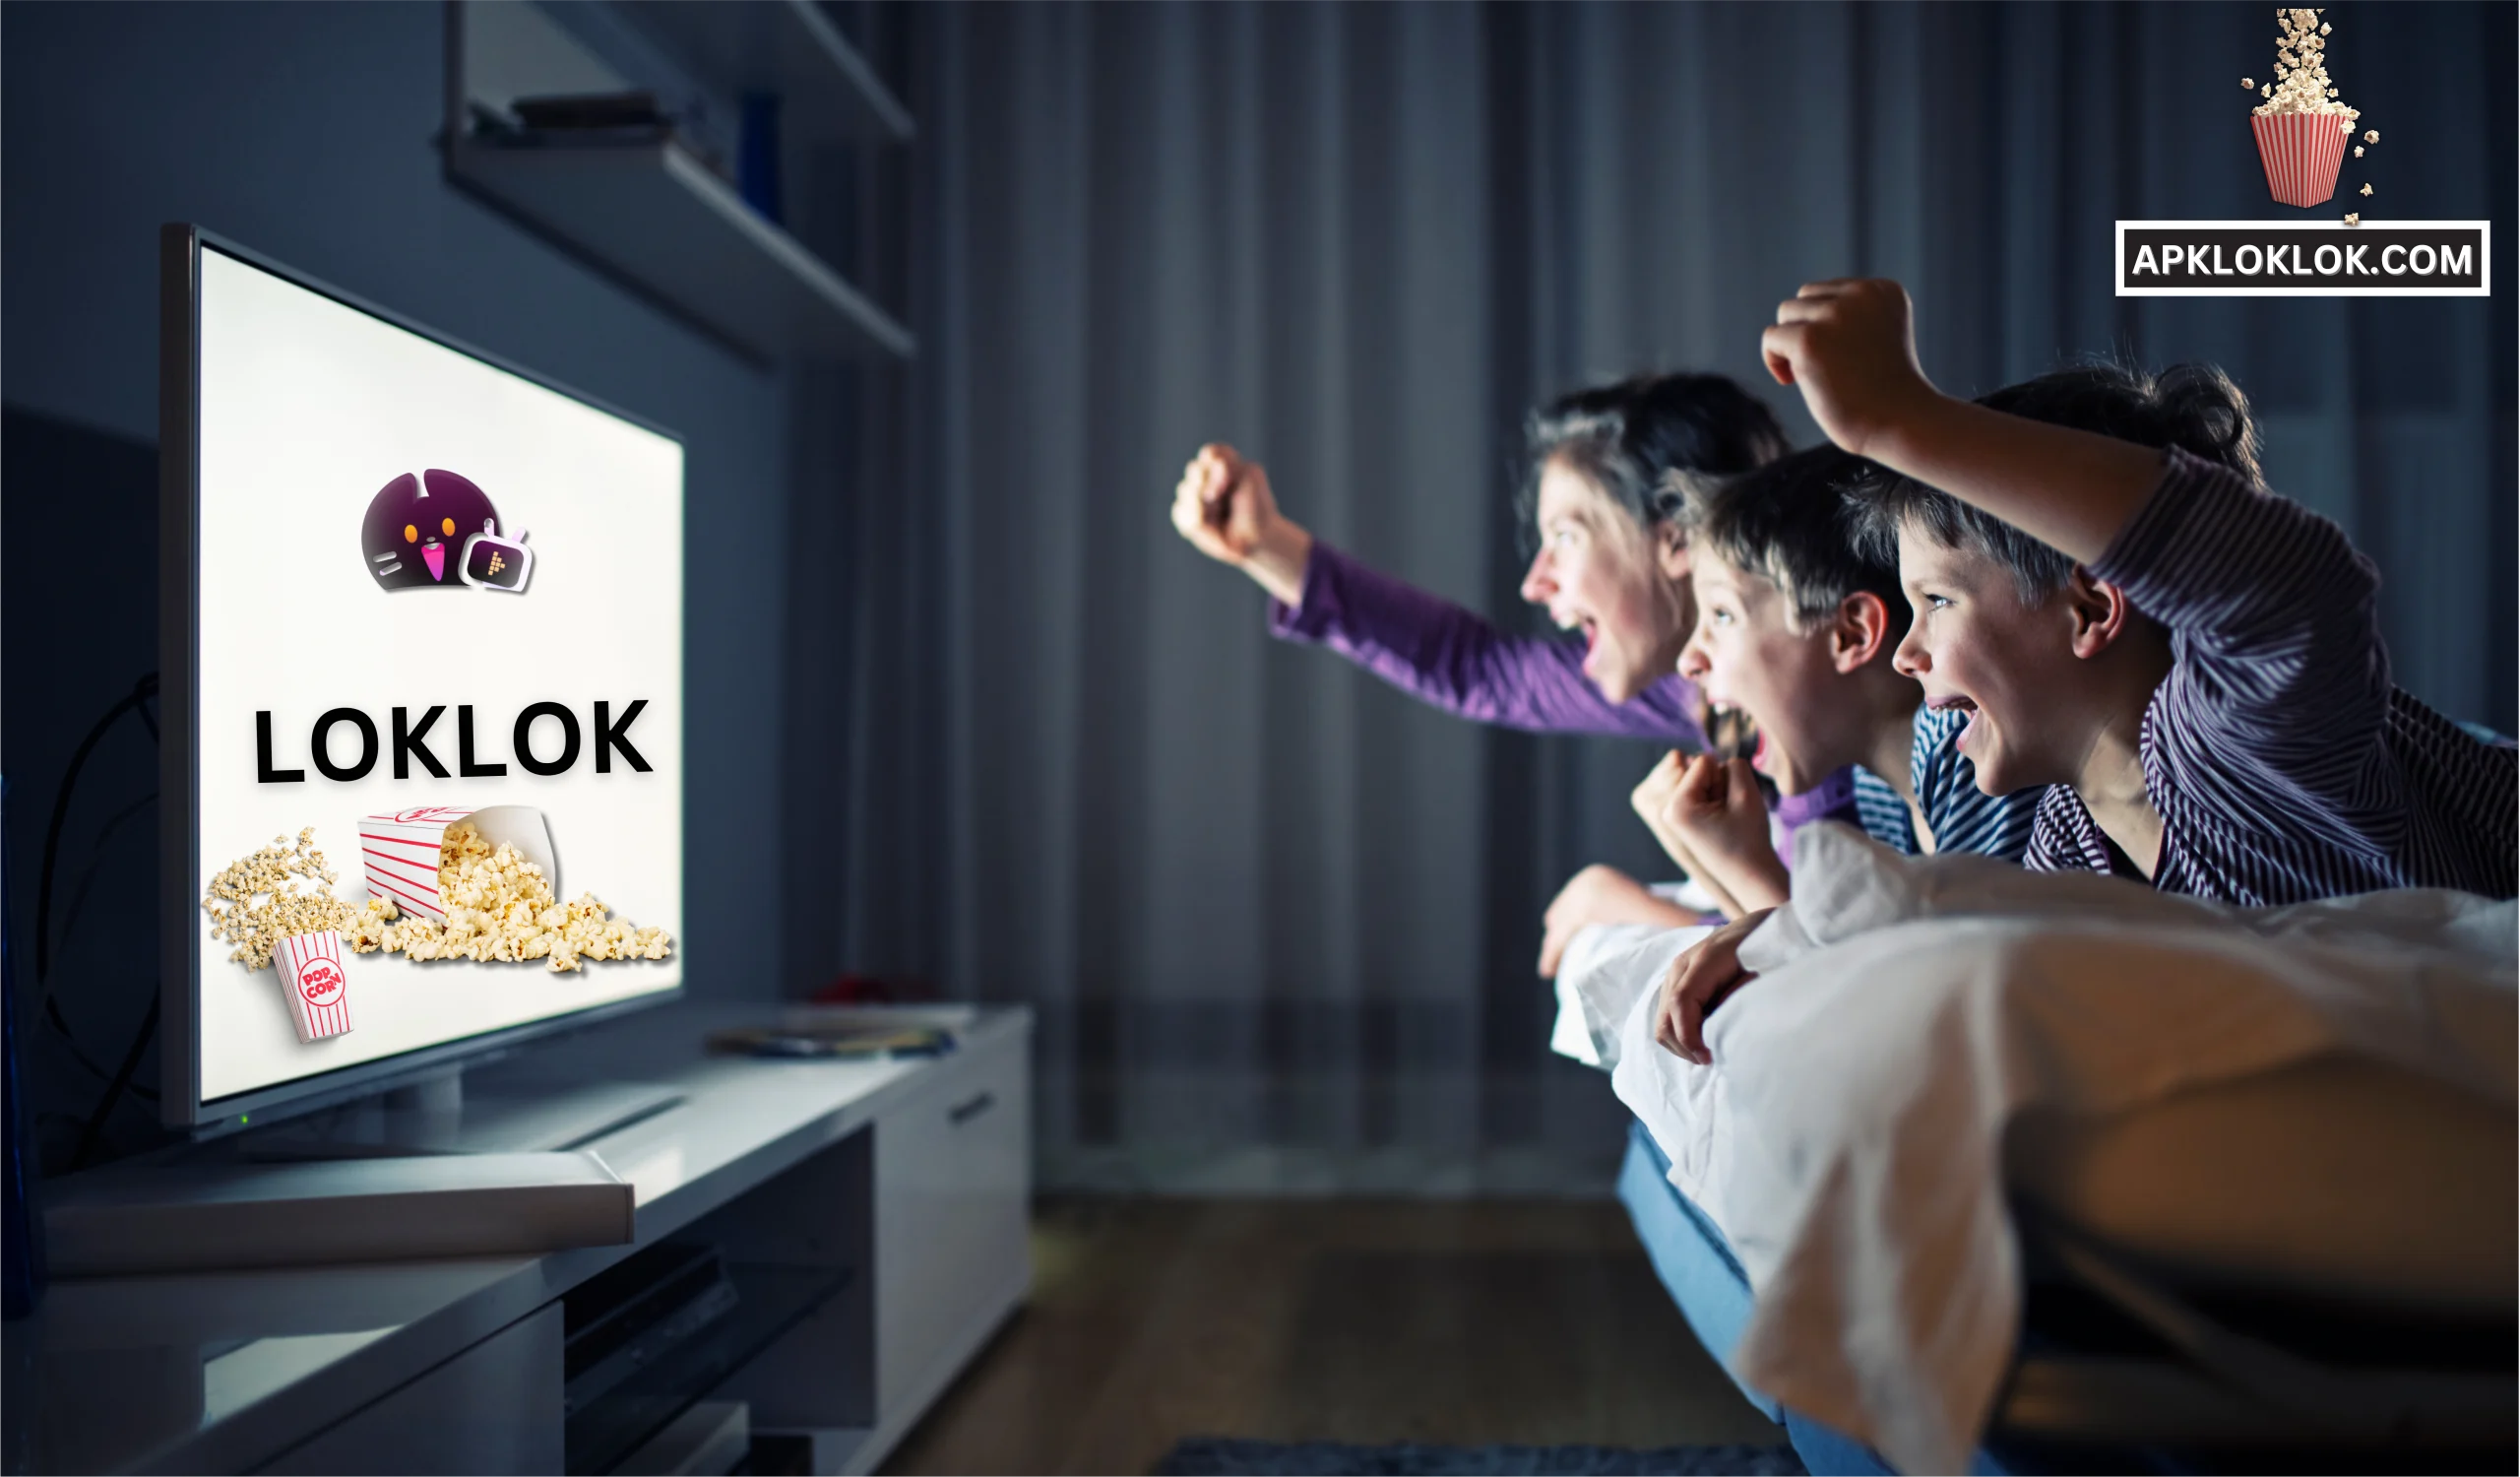 How to Play Loklok on TV